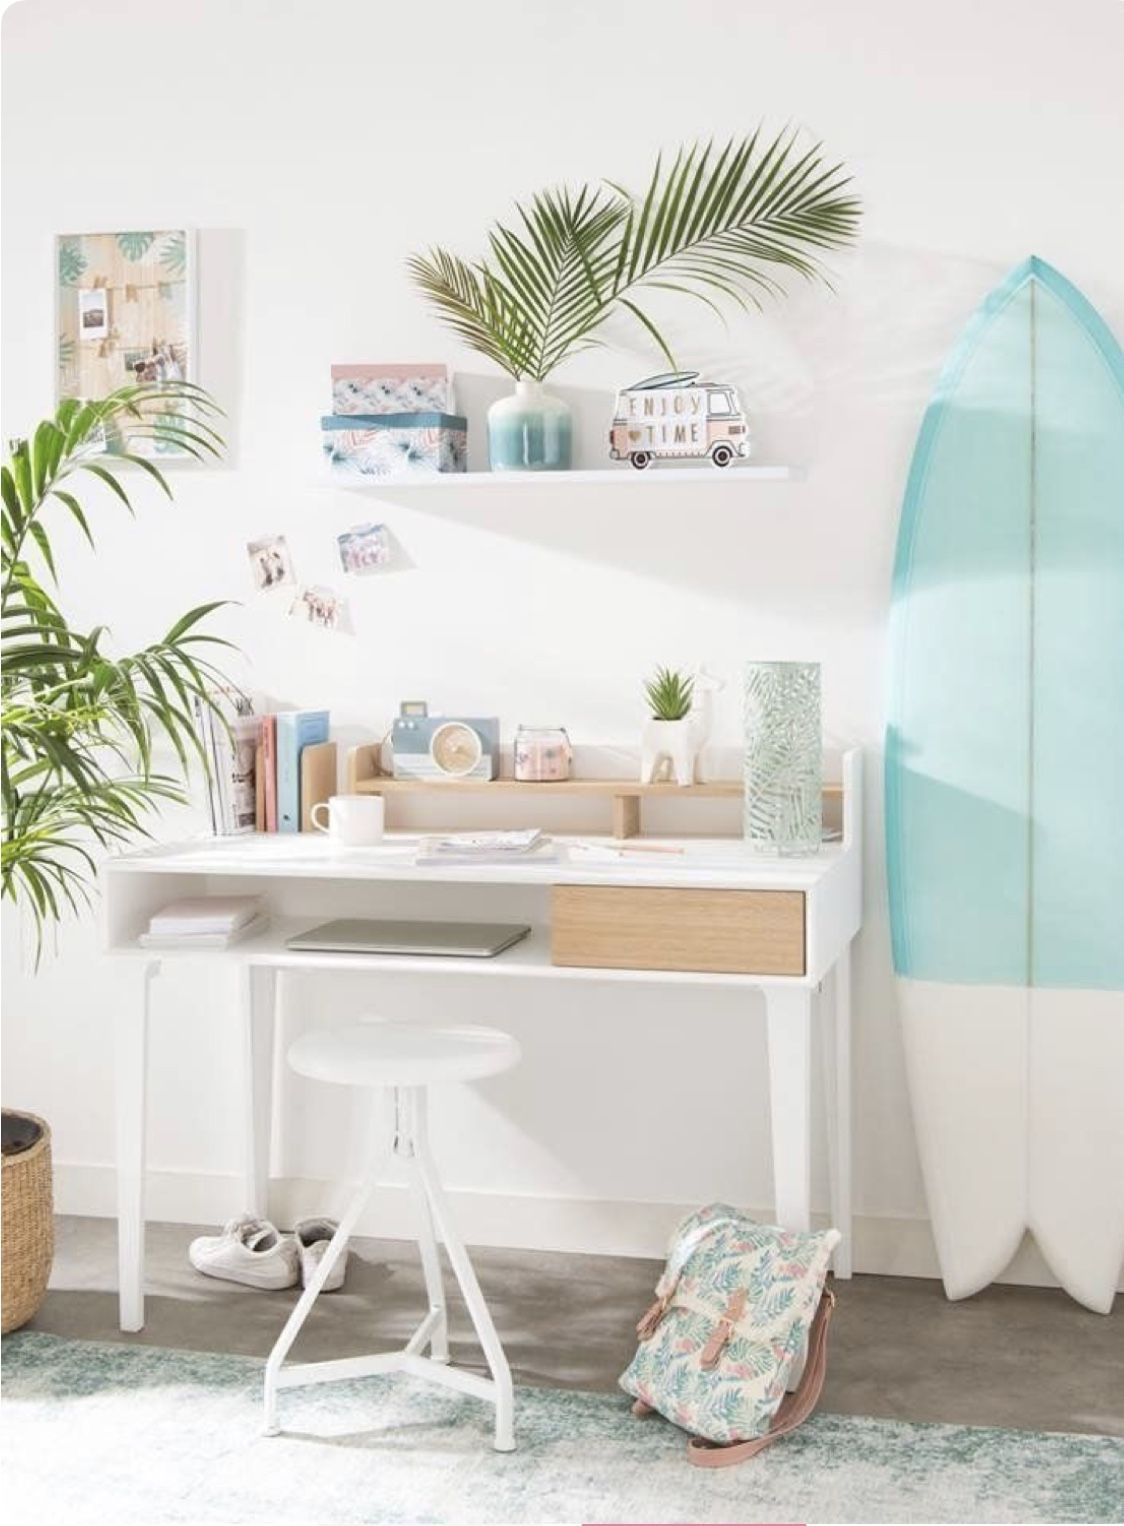 Surfer Bedroom Ideas | Surf Style - Surfer Bedroom Ideas | Surf Style -   19 diy Room vsco ideas